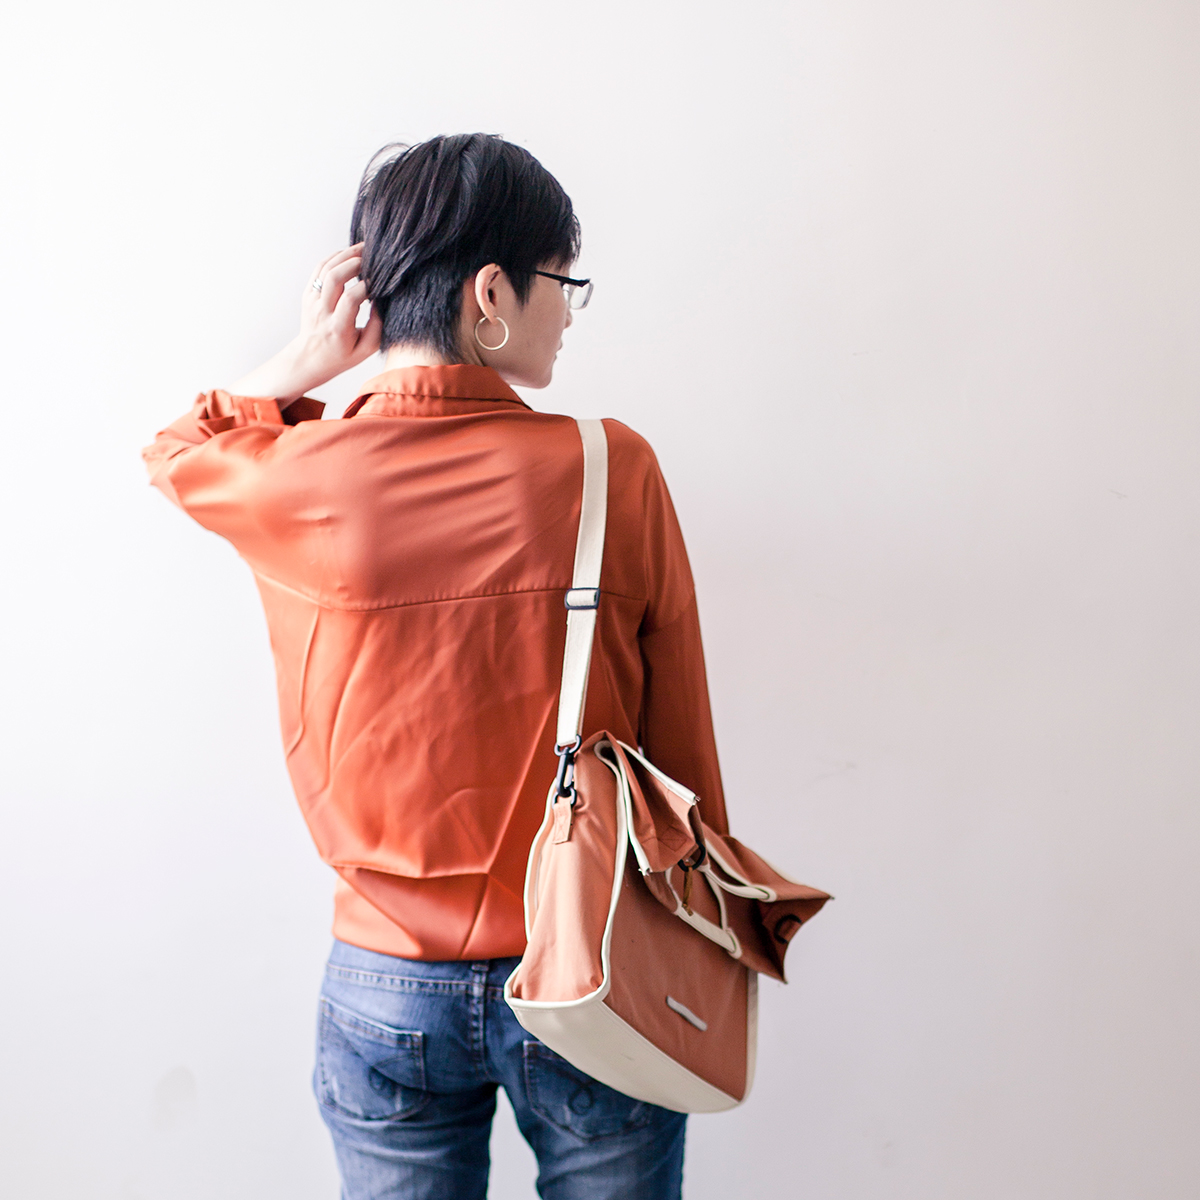 OOTD: Pomelo Fashion orange blouse, Espirit denim jeans, RAWROW convertible satchel, OWNDAYS glasses.